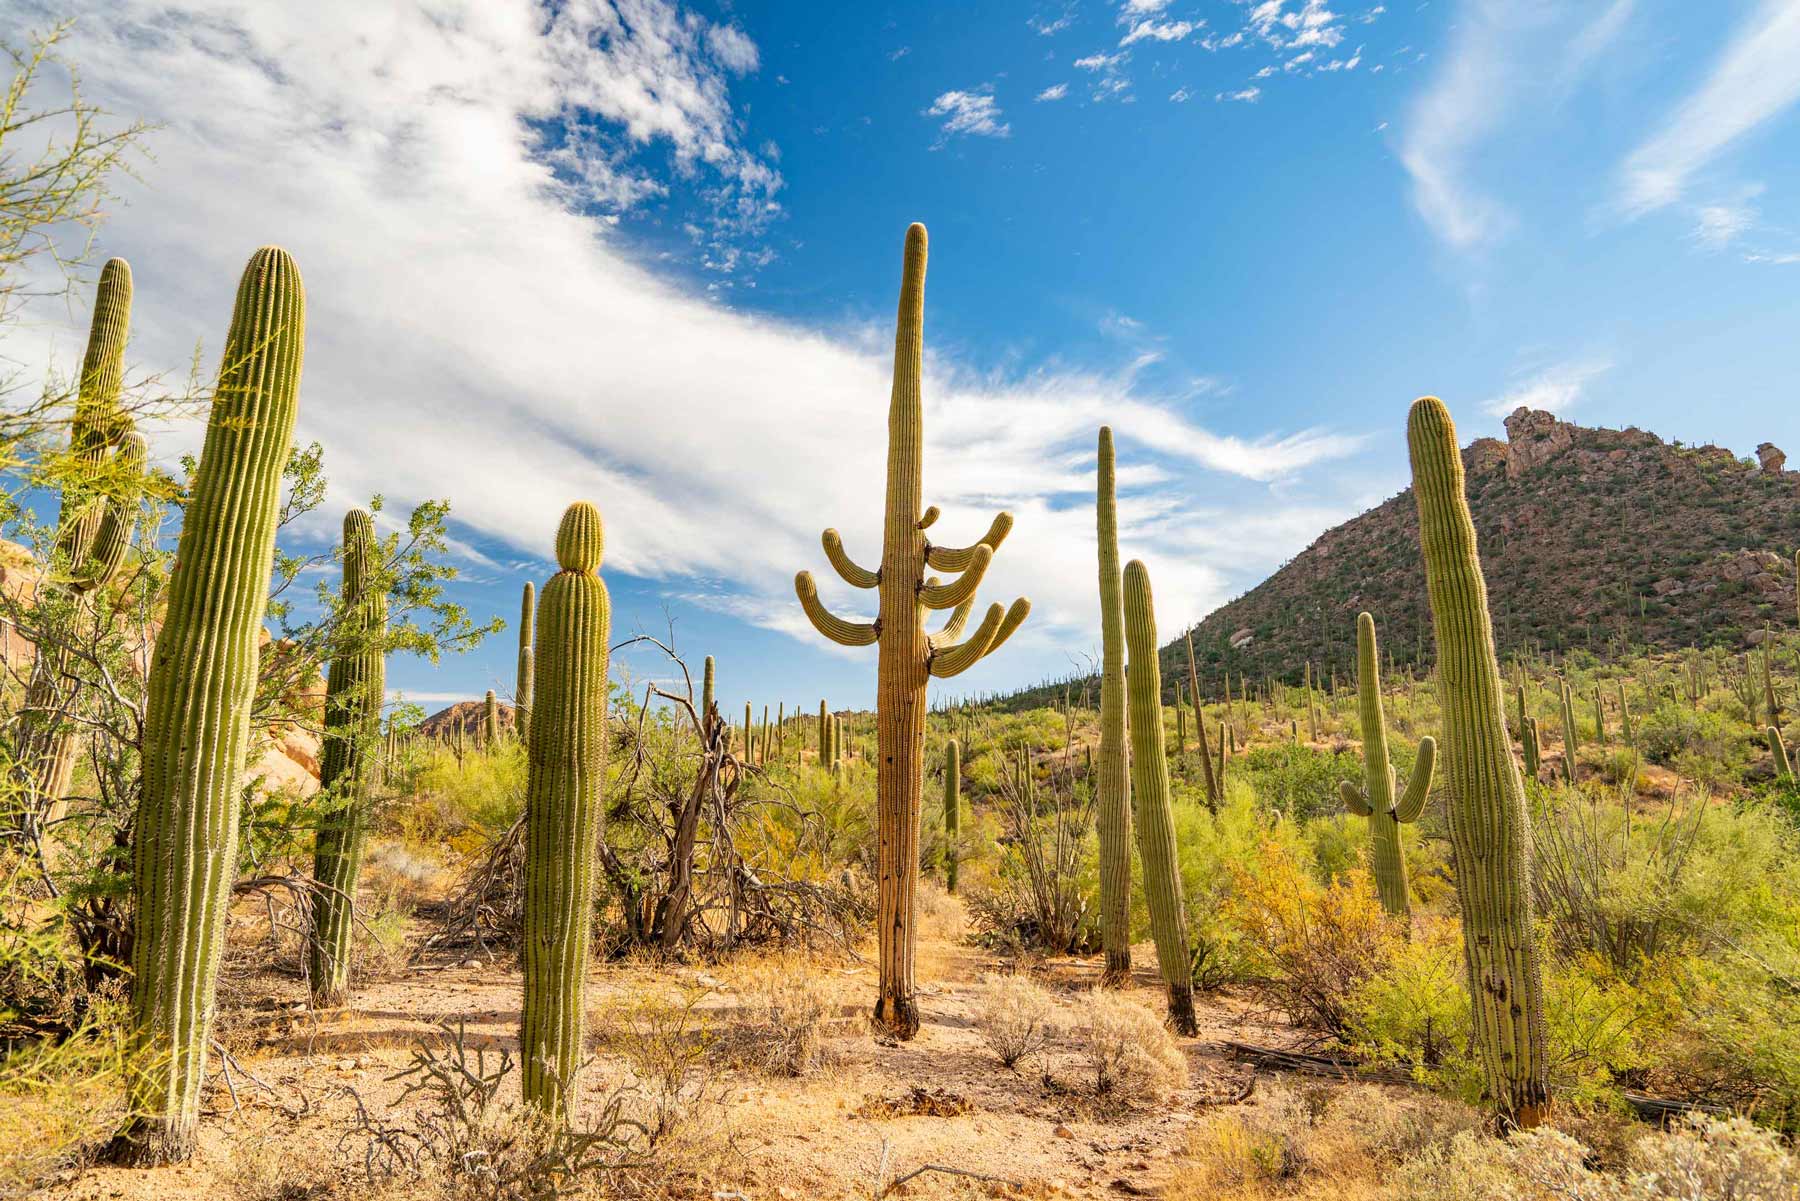 saguaro cactus, saguaro national park tucson arizona